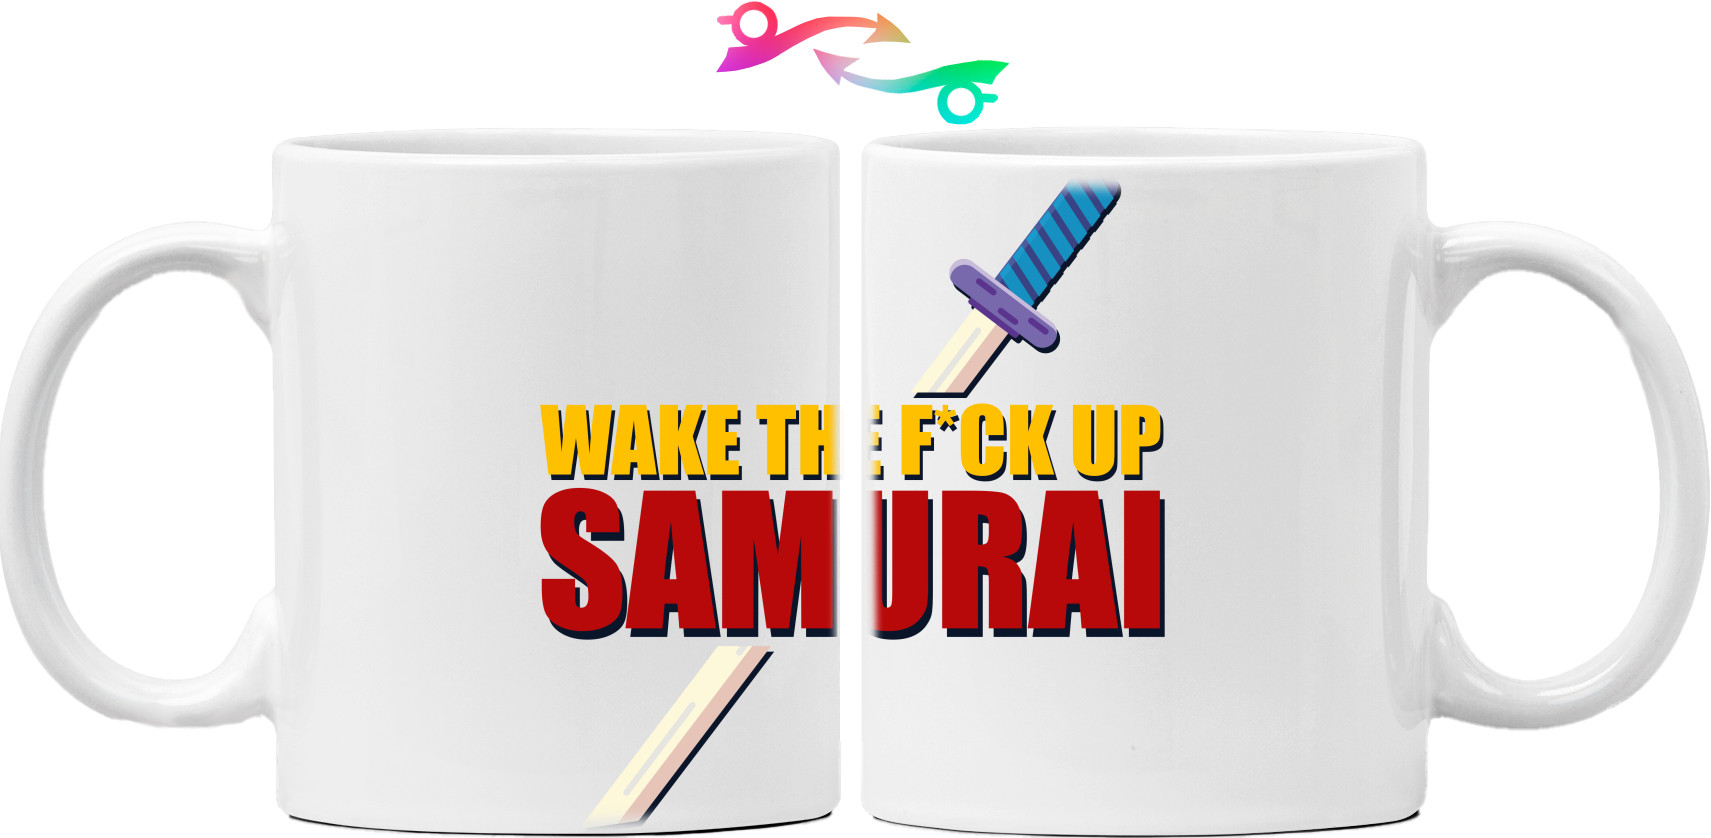 Wake up samurai